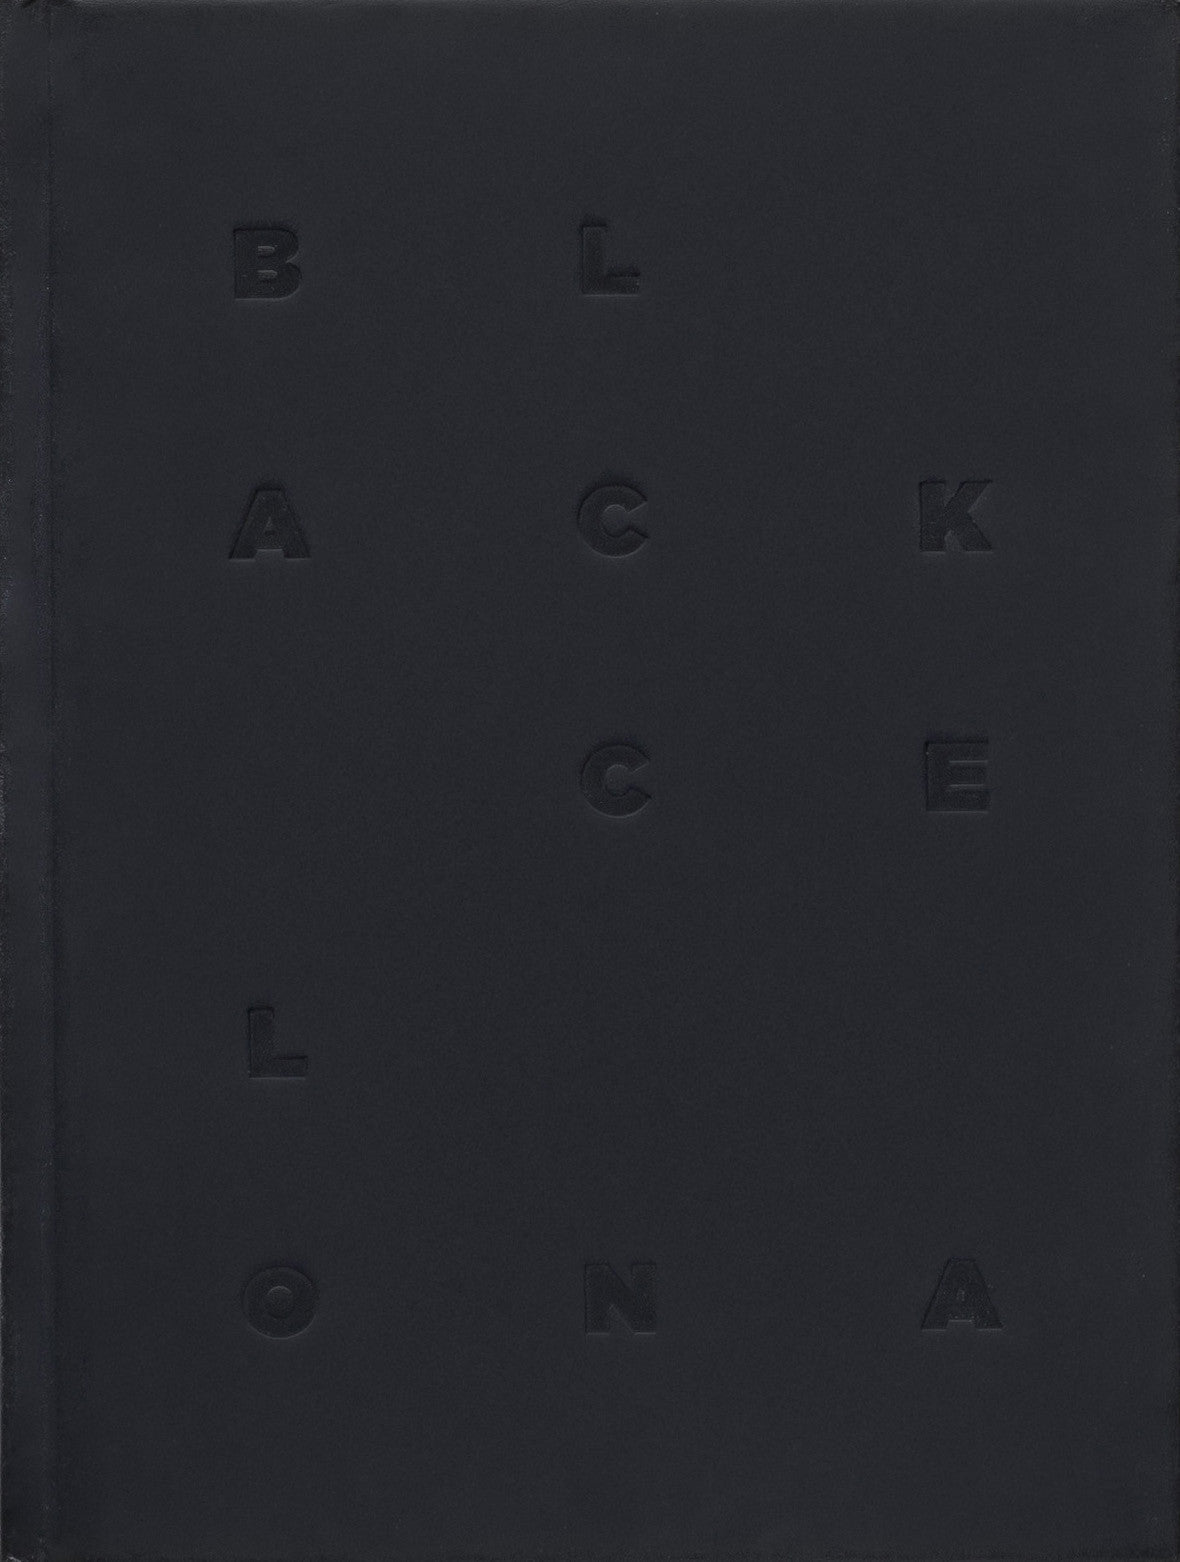 Blackcelona - Salvi Danés